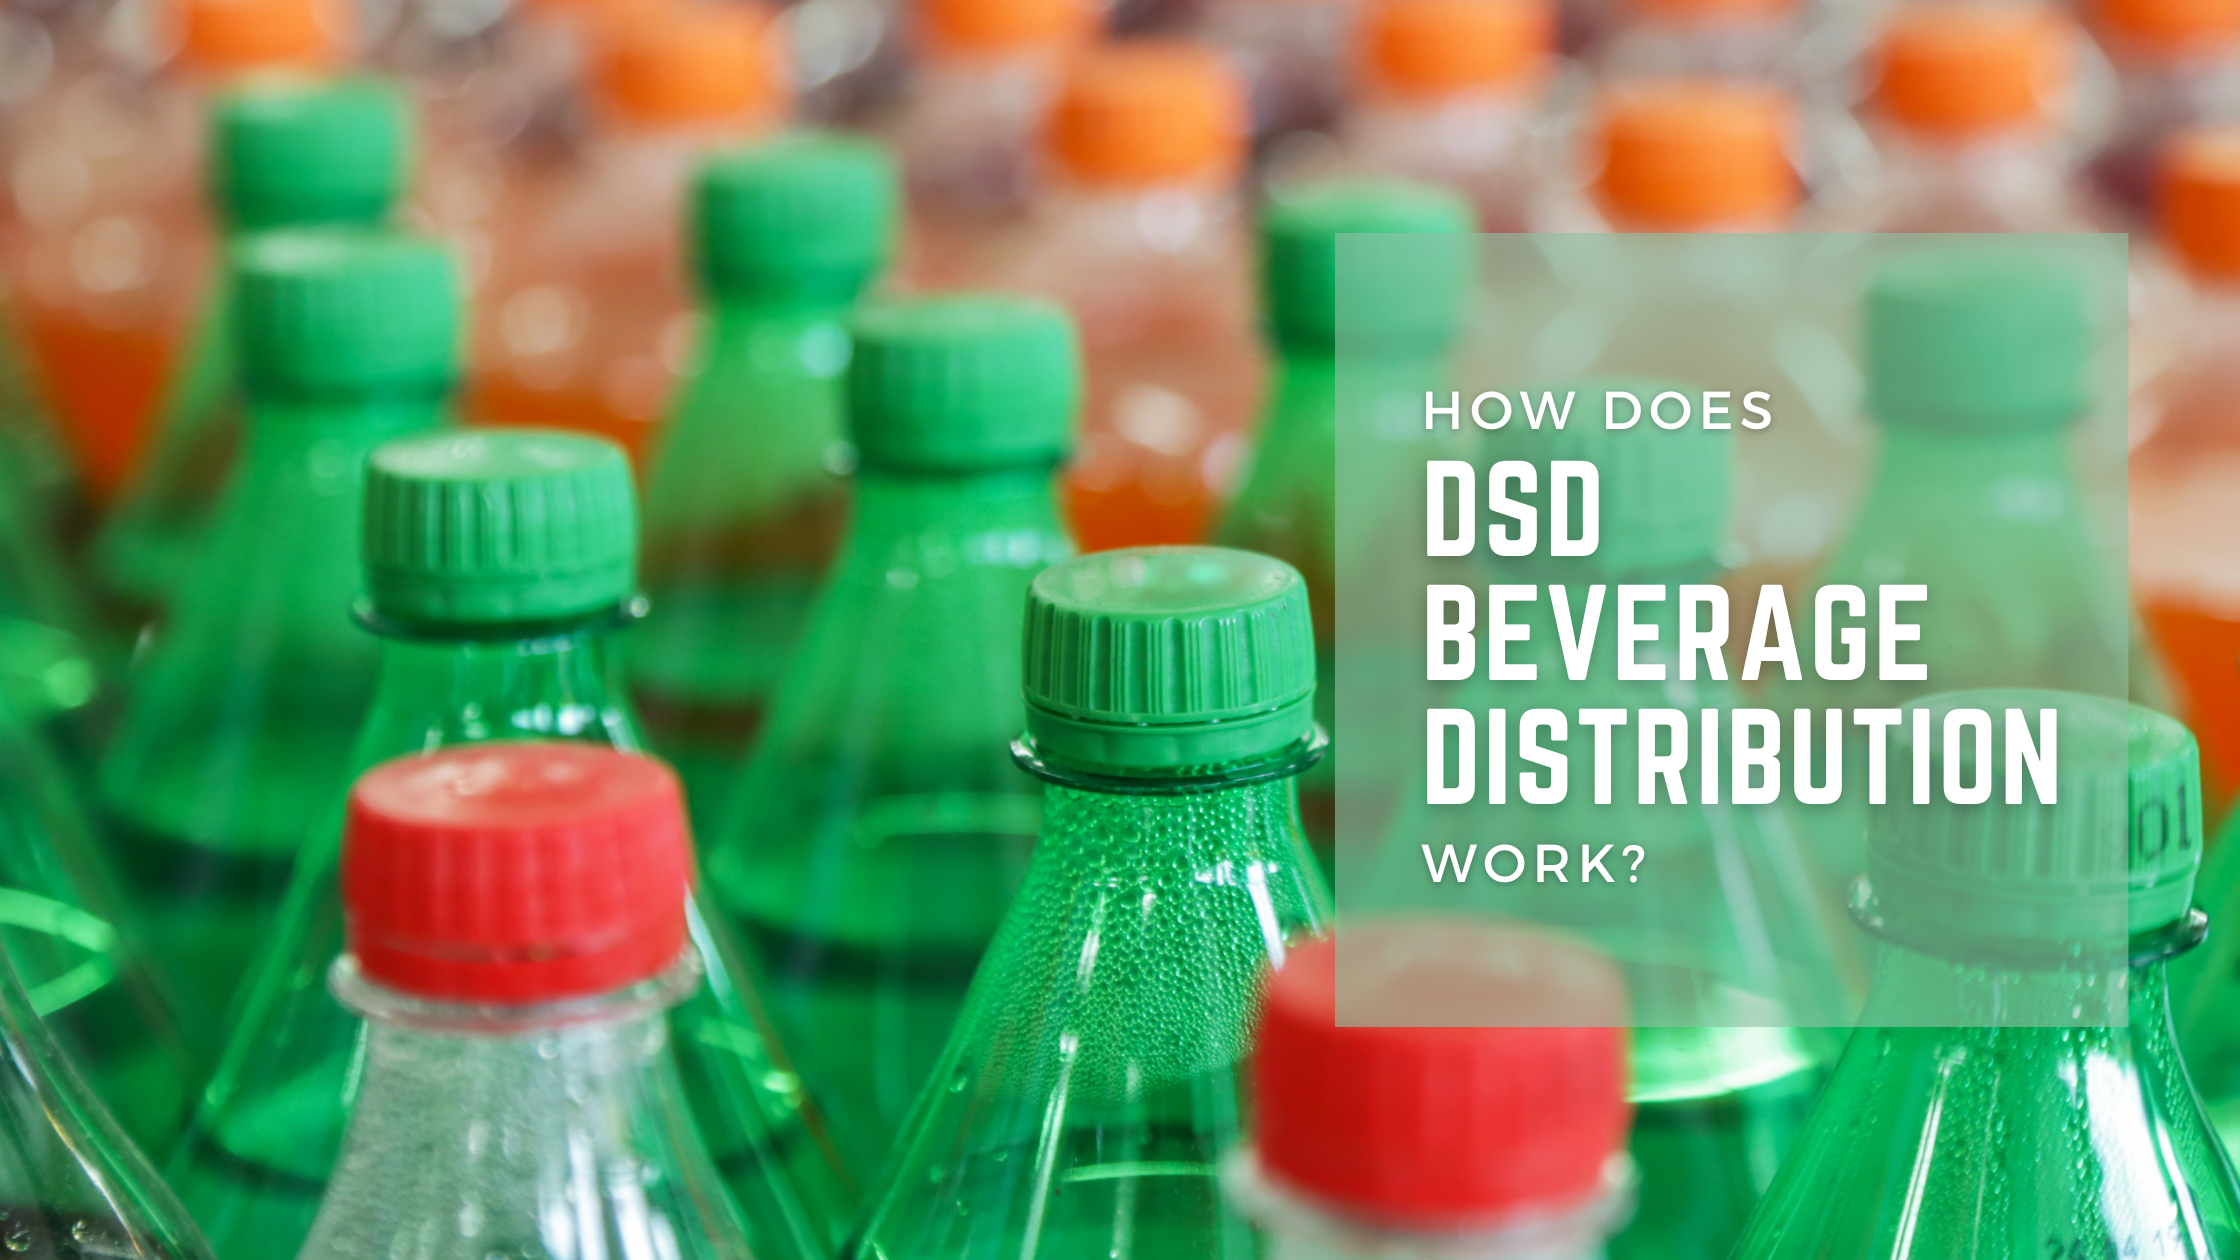 How does DSD beverage distribution work?